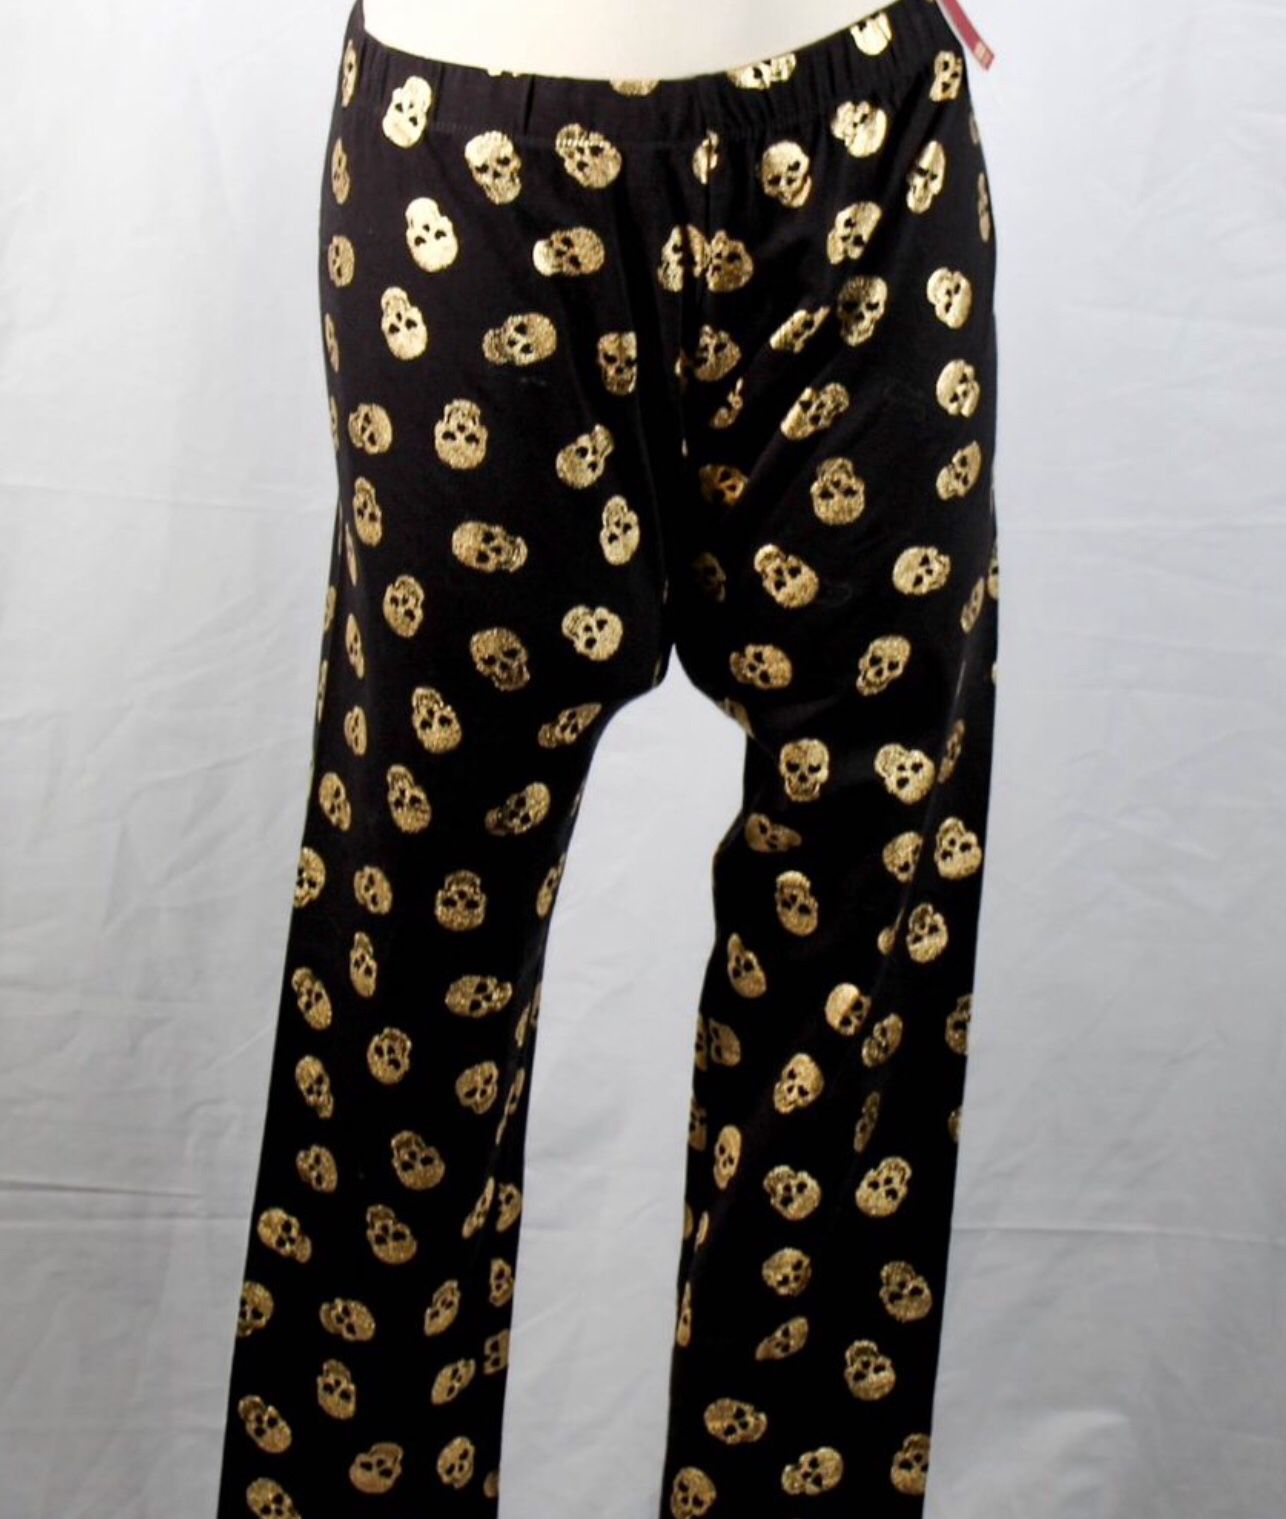 NWT Vintage Y2K Mall Goth Aesthetic Black Leggings With Metallic Gold Skull Print Size XL Juniors 